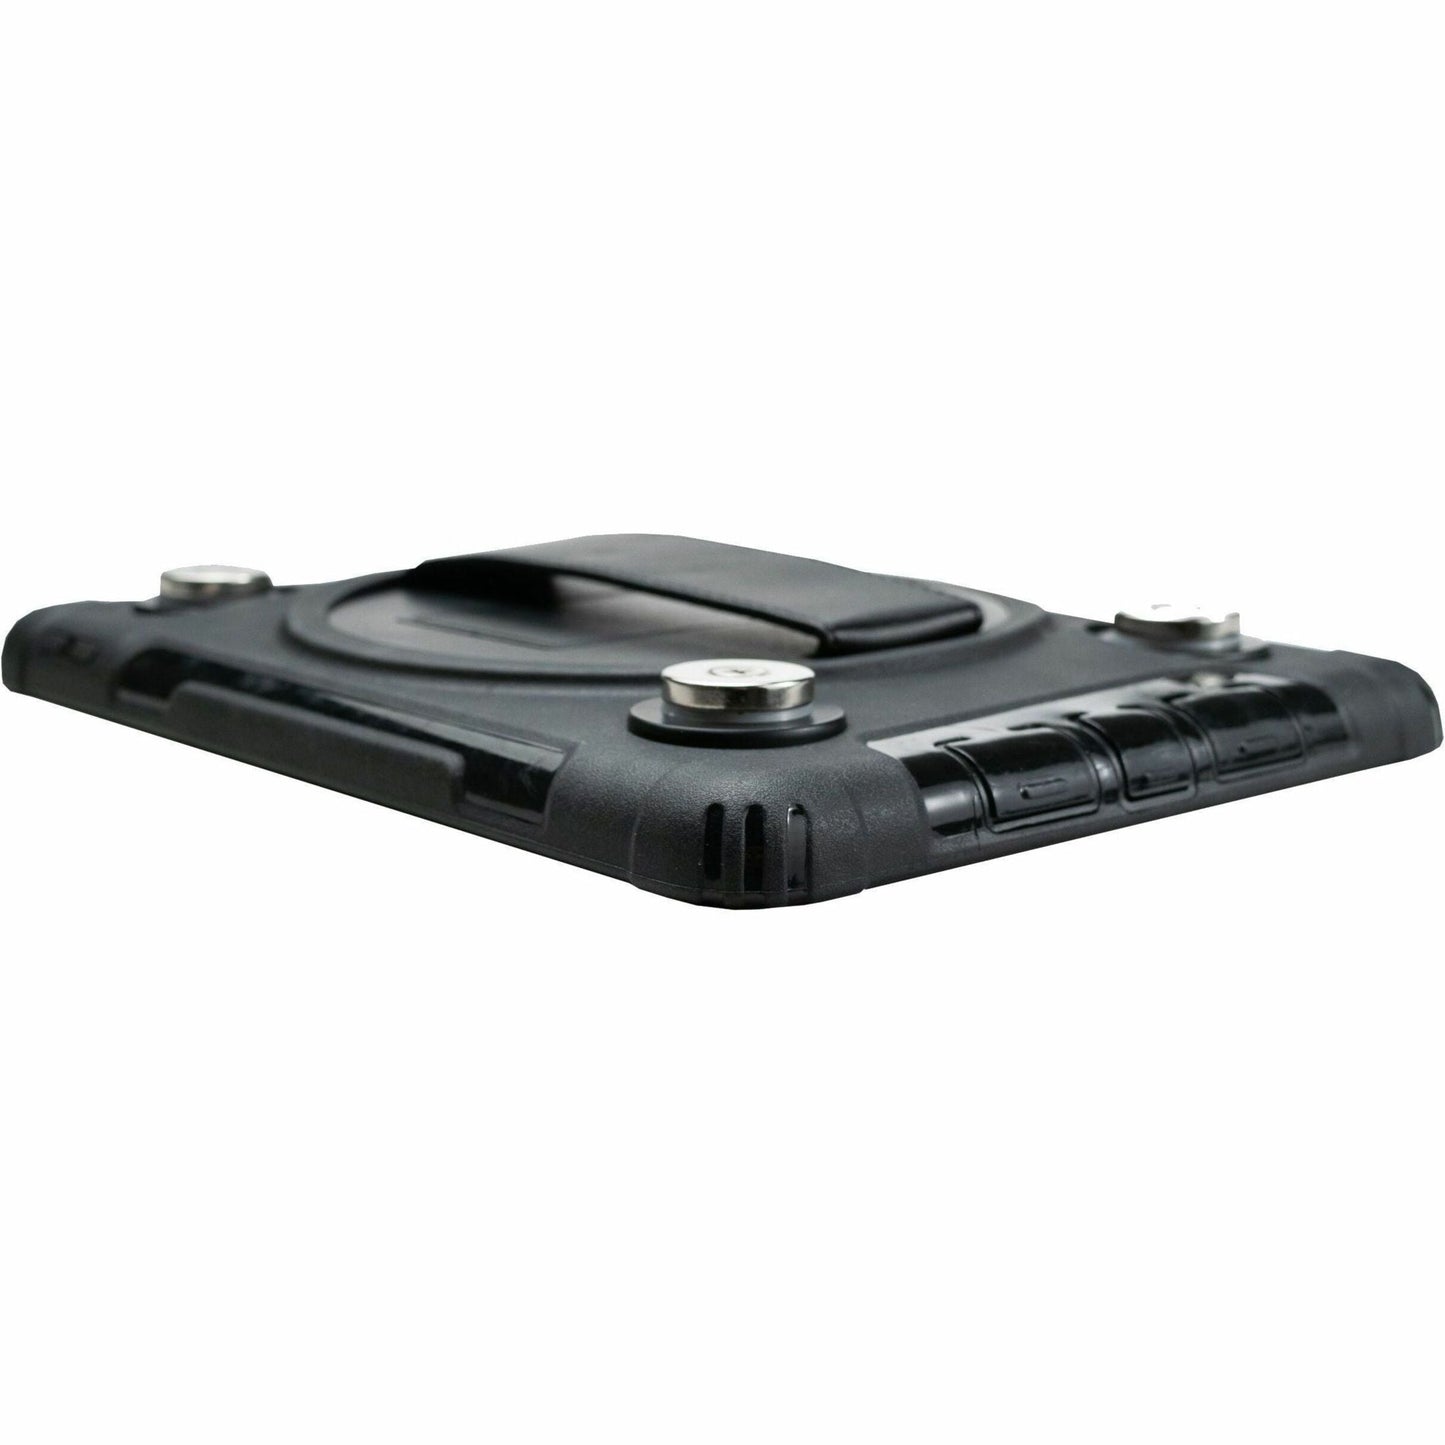 CTA Digital Magnetic Splash-Proof Case with Metal Mounting Plates for iPad Air 2 iPad Gen 5-6 iPad Pro 9.7"